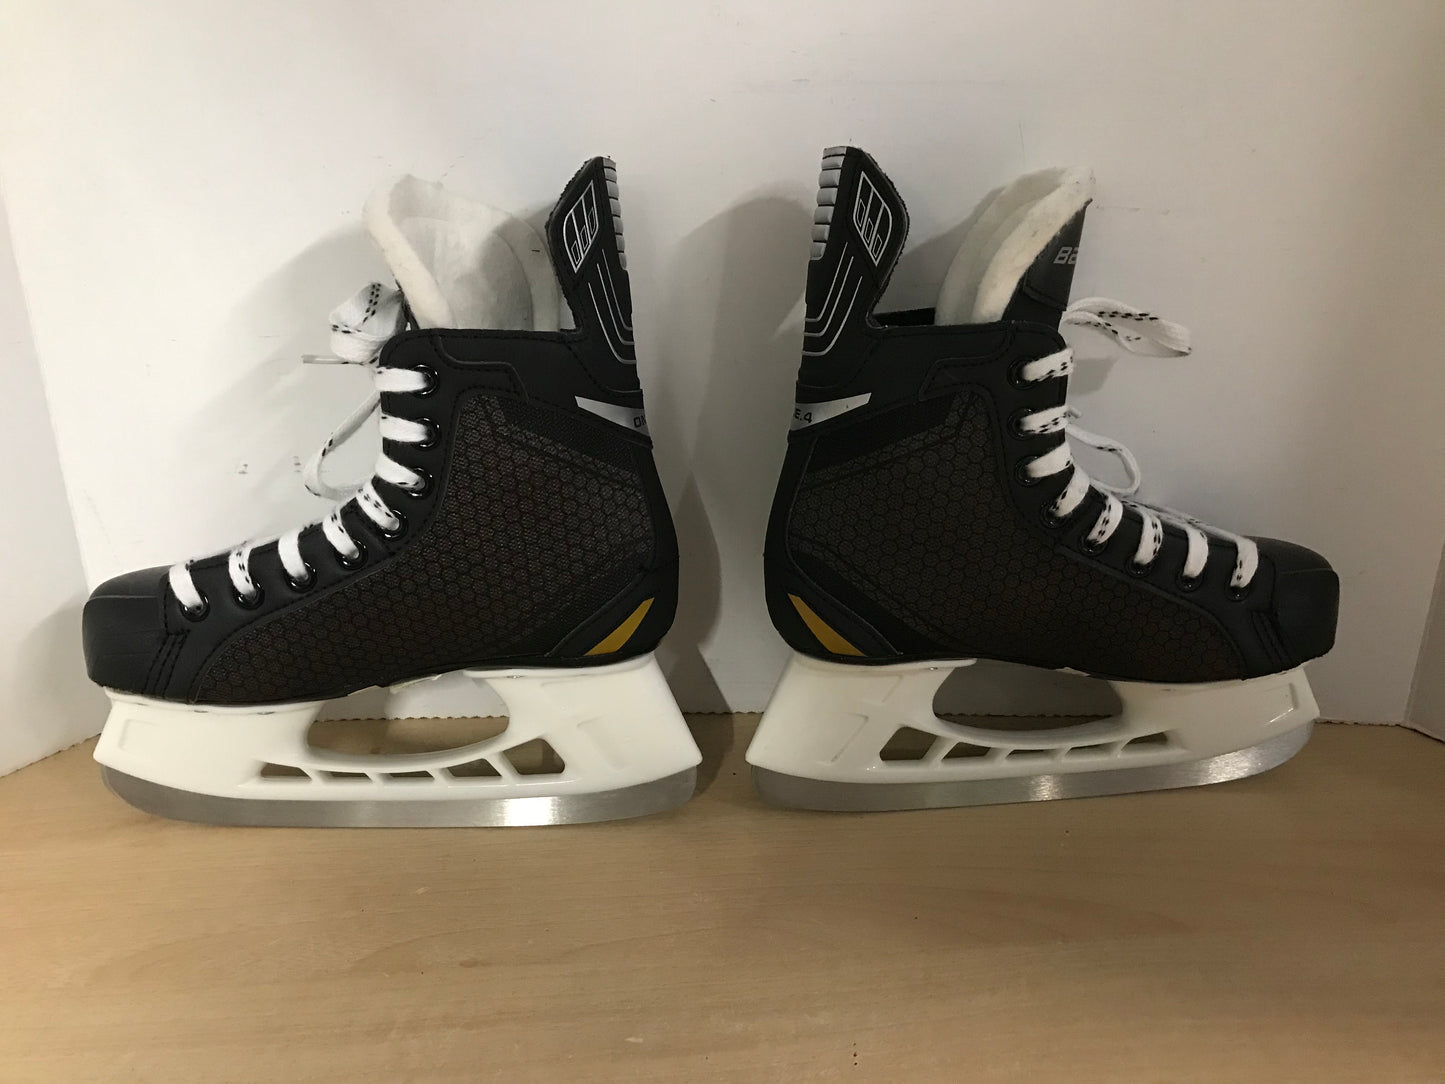 Hockey Skates Child Size 3 Shoe Size Bauer Supreme One.4 New Demo Model